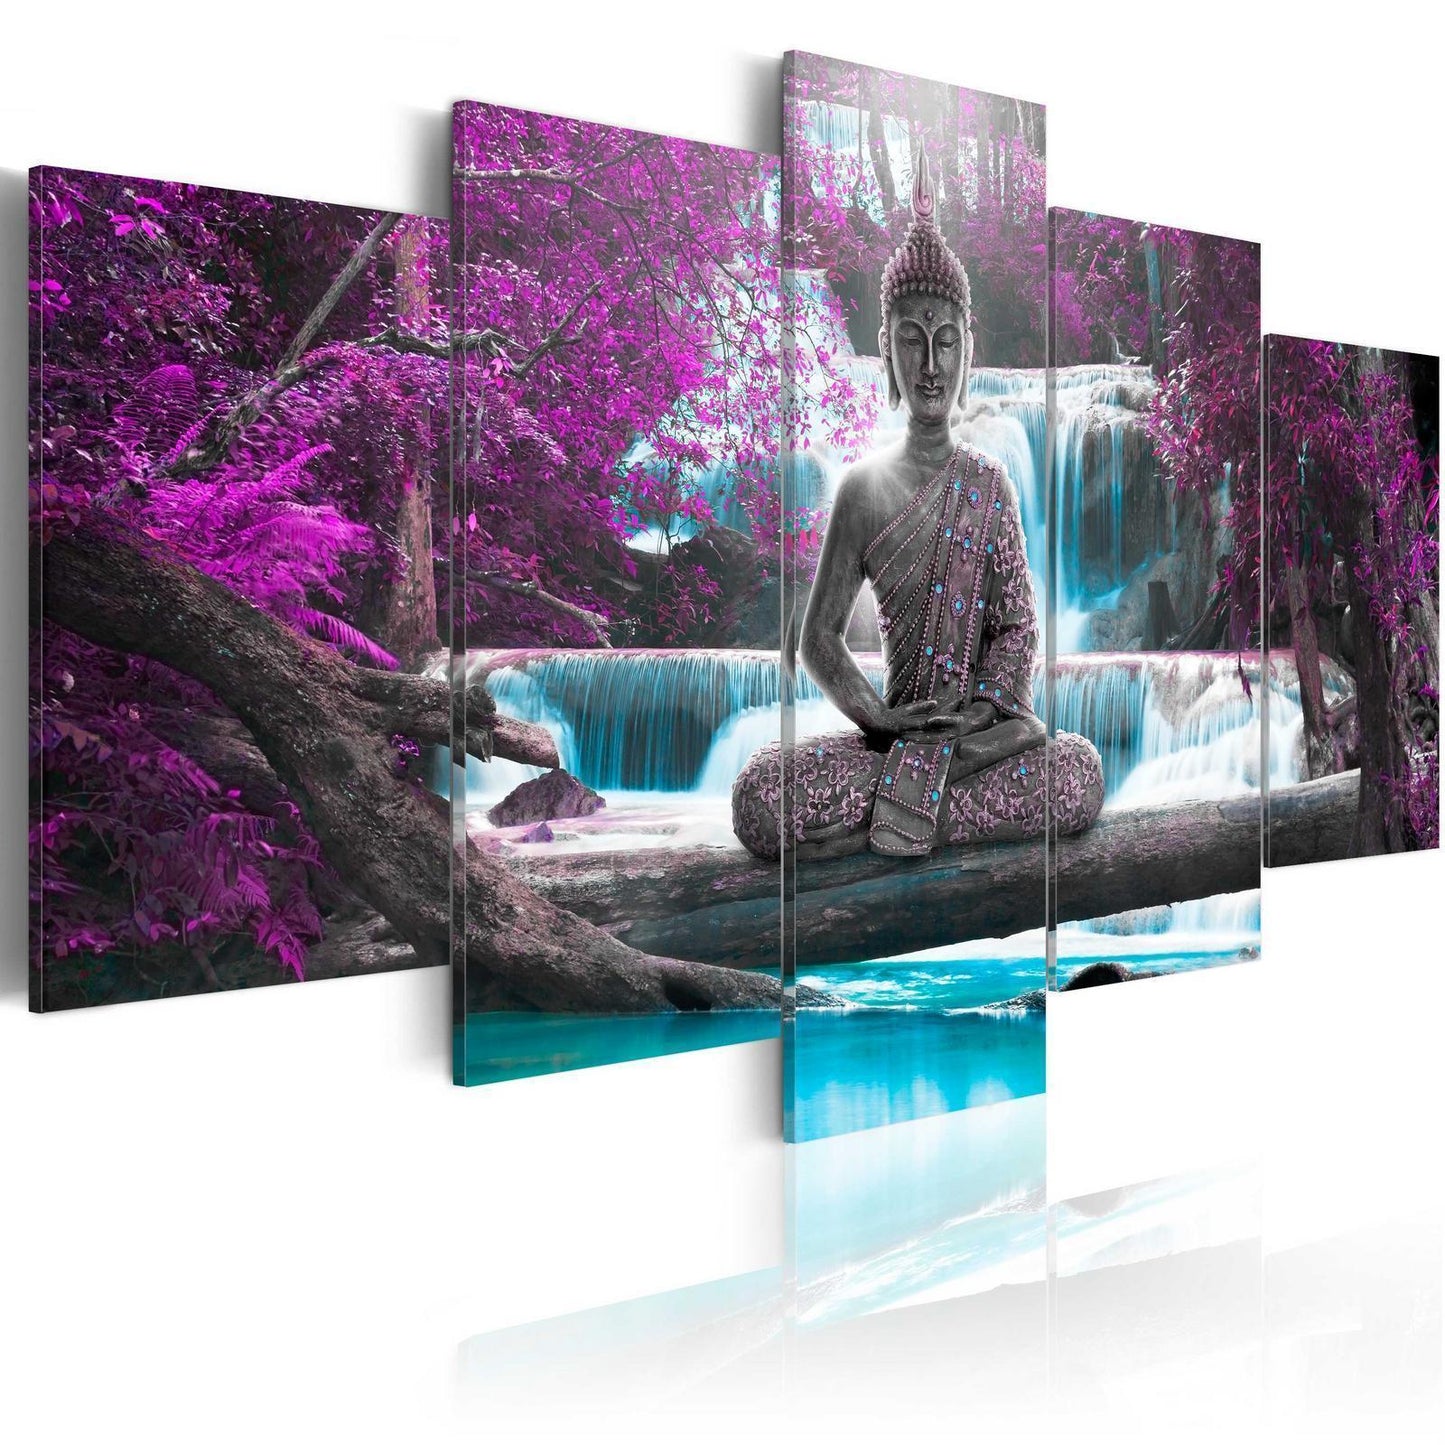 Painting - Waterfall and Buddha